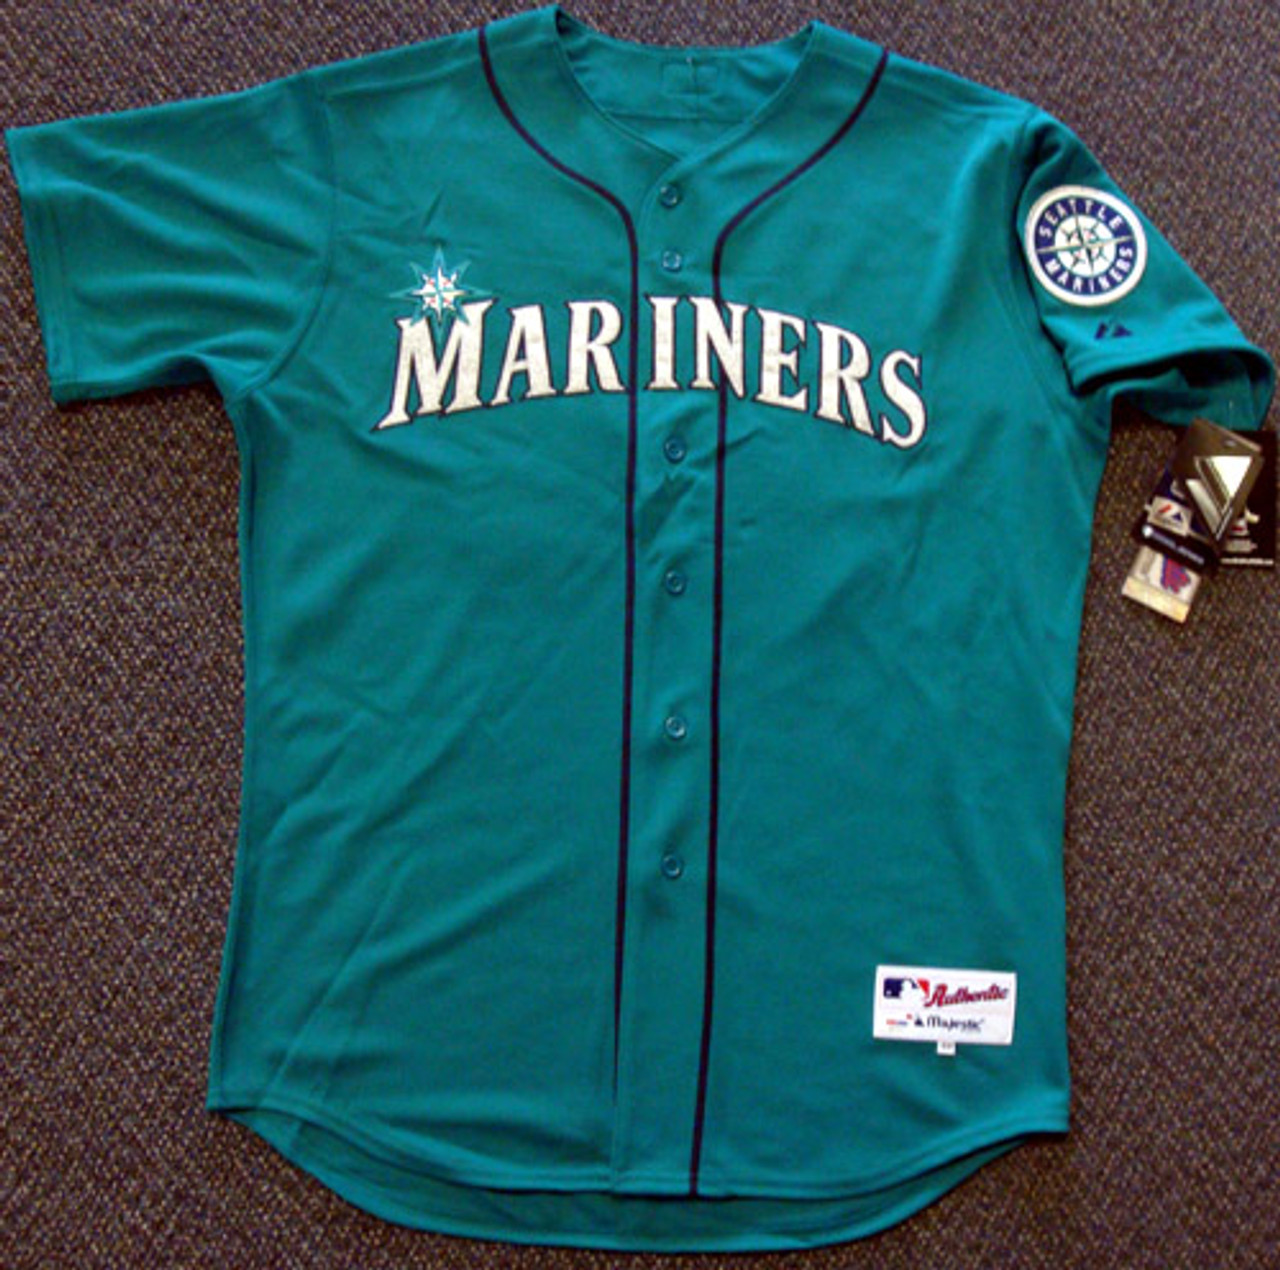 Seattle Mariners Felix Hernandez Autographed Teal Authentic Majestic Jersey  King Felix Size 48 PSA/DNA Stock #33043 - Mill Creek Sports